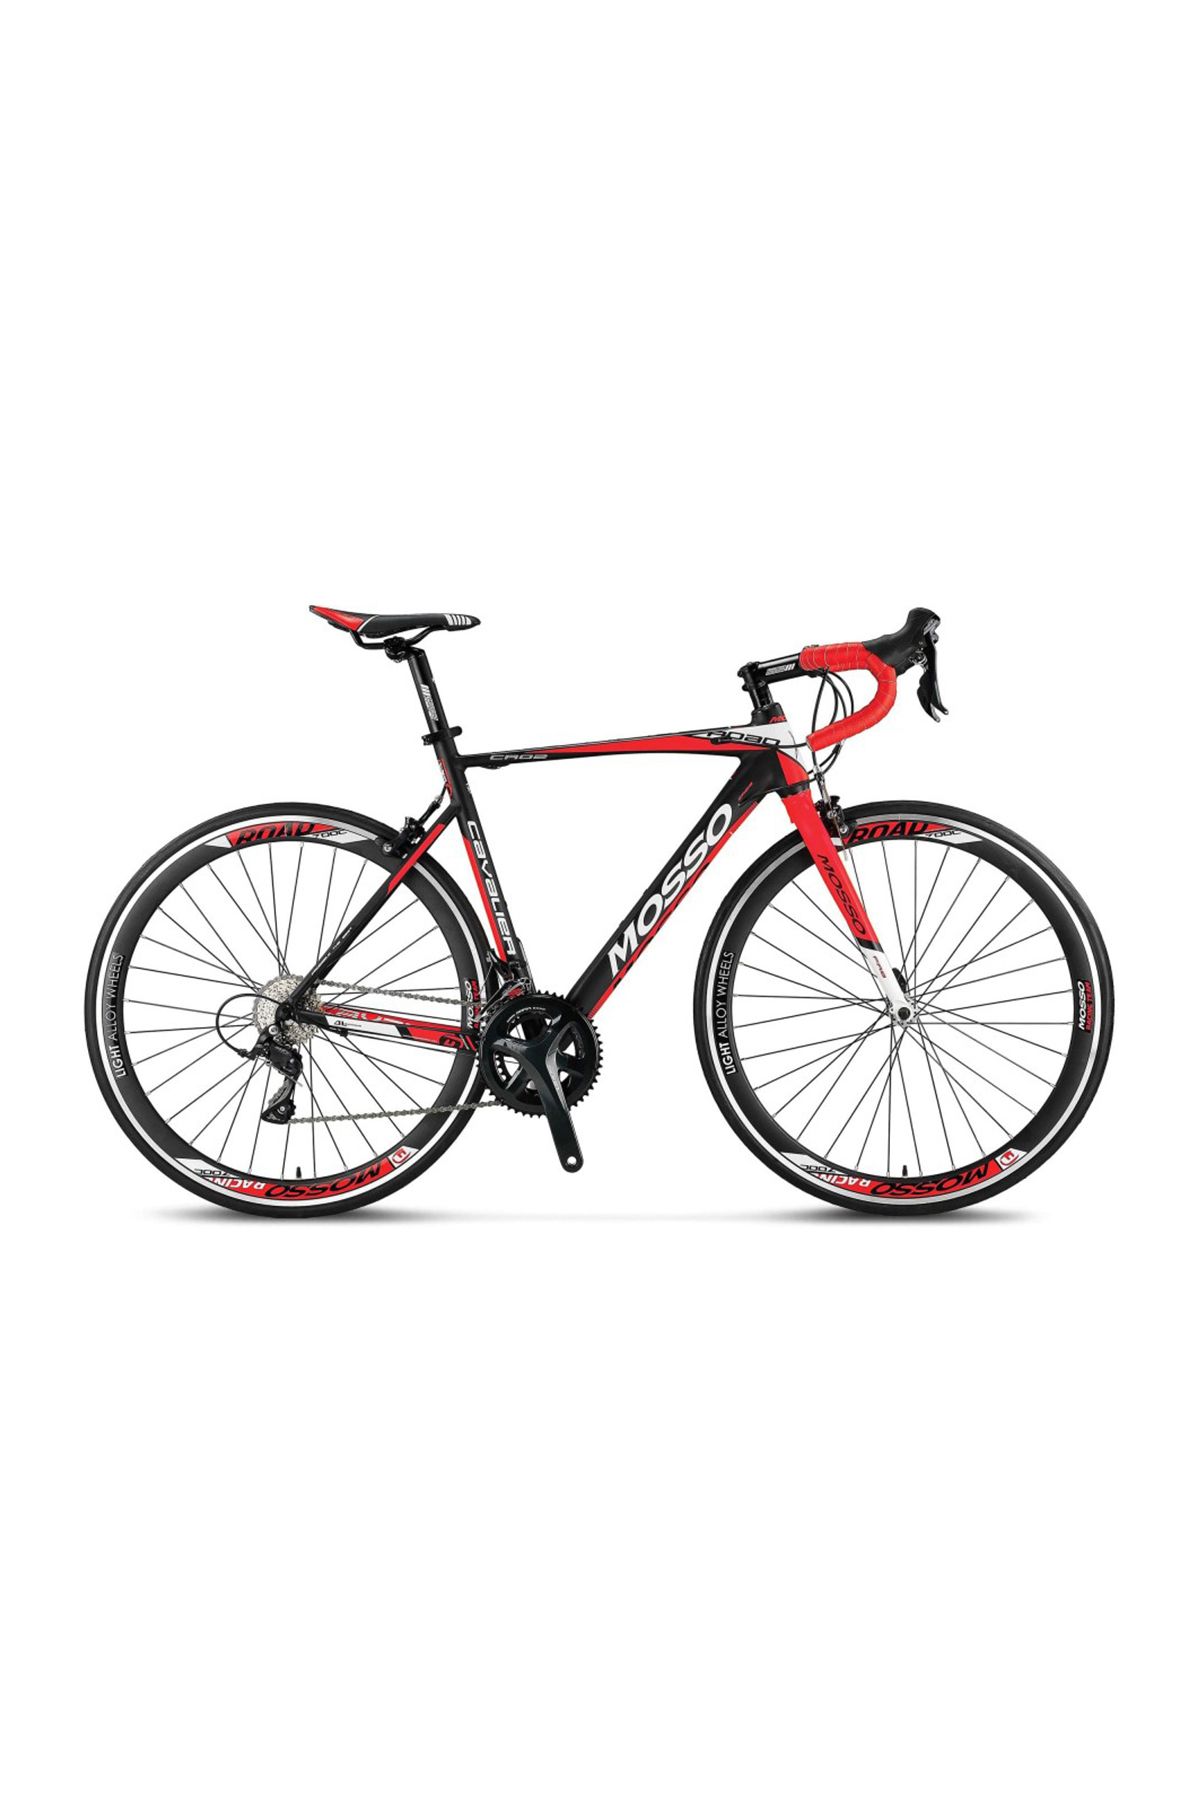 Mosso Cavalier 700 Sora - 18 Vites 54 Cm (M - L) Kadro Yol Bisikleti - Siyah Kırmızı